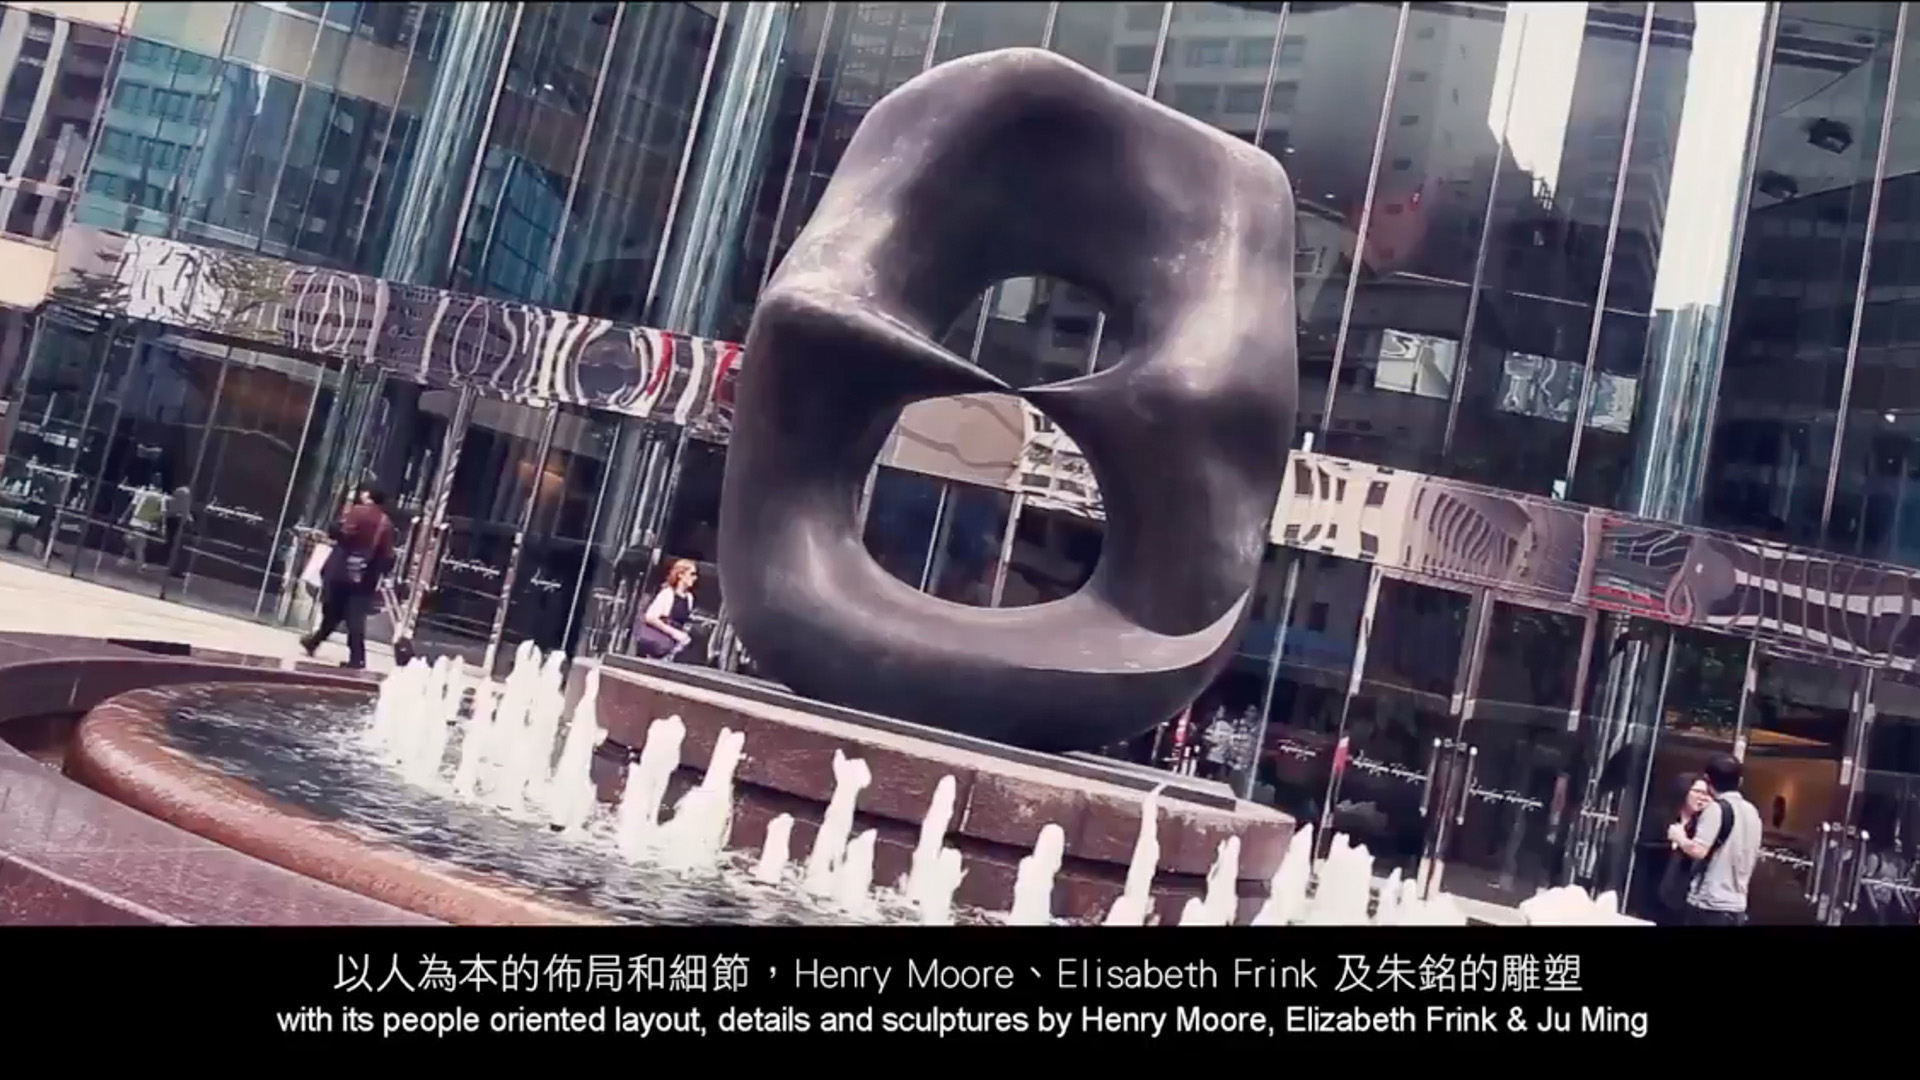 D2 Studio 市場營銷策劃與品牌策劃香港及廣州中國為P&T安排的企業視頻製作The production of corporate videos 2